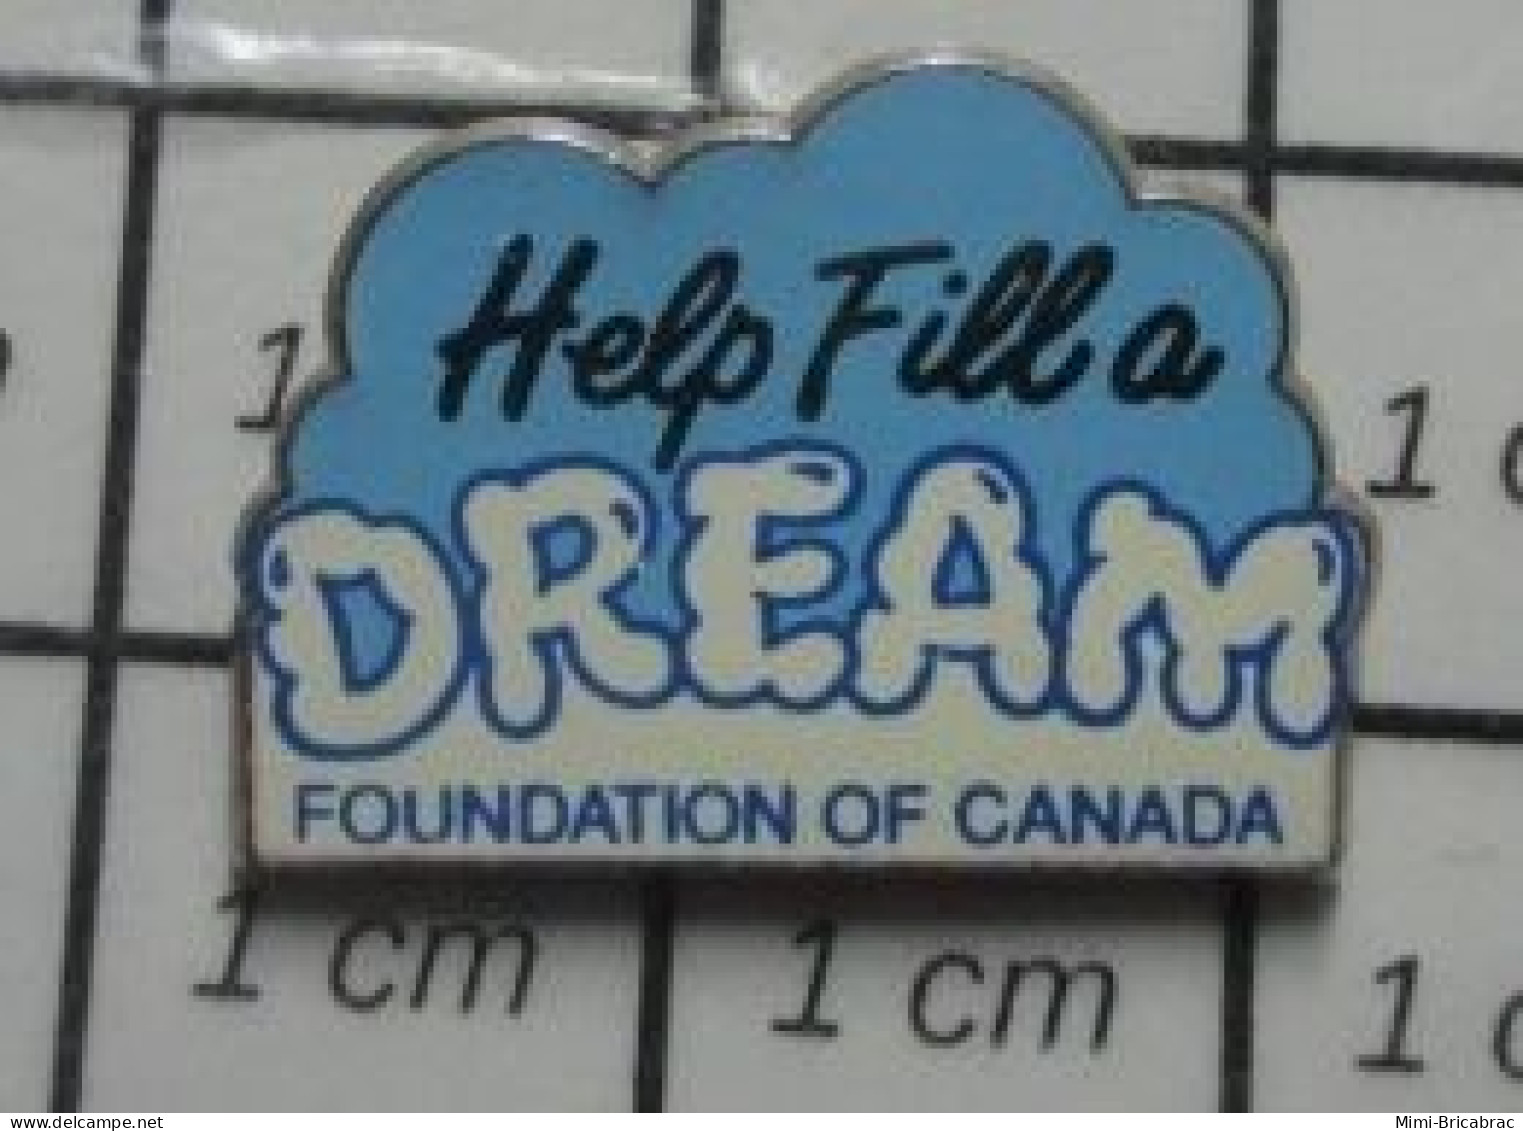 811B Pin's Pins / Beau Et Rare / ASSOCIATIONS / HELP FILL A DREAM FOUNDATION OF CANADA - Associazioni